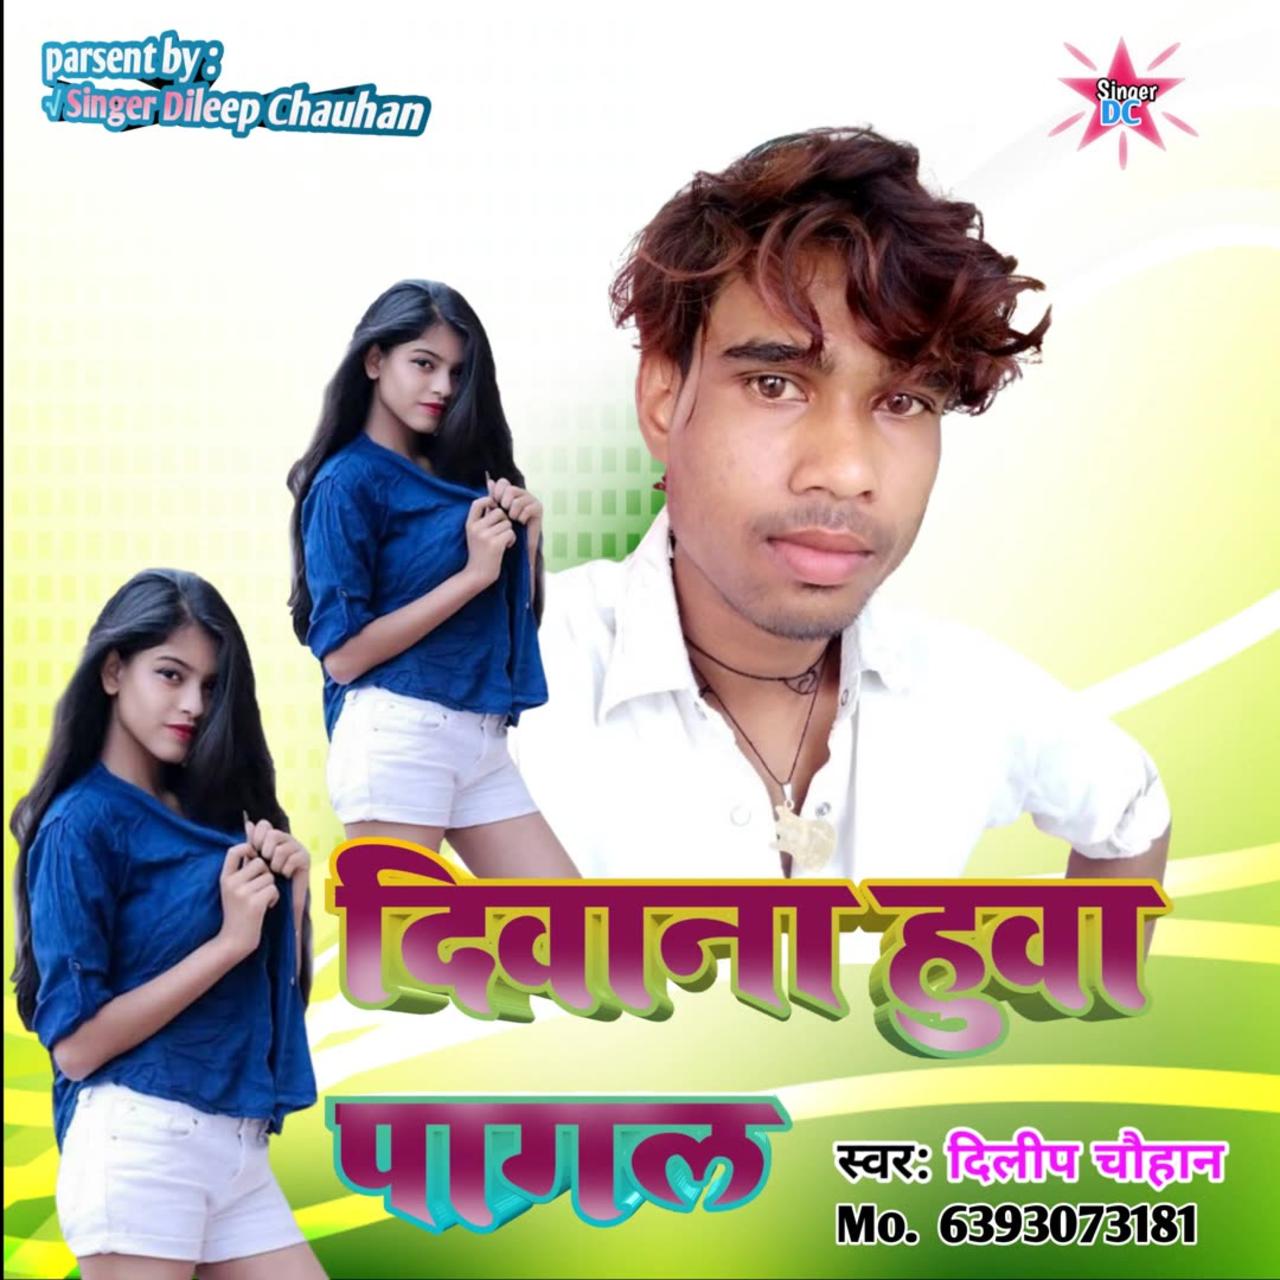 Diwana hua pagal Bhojpuri songs. Singer Dileep Chauhan 🔥 ka superhit Bhojpuri sad song